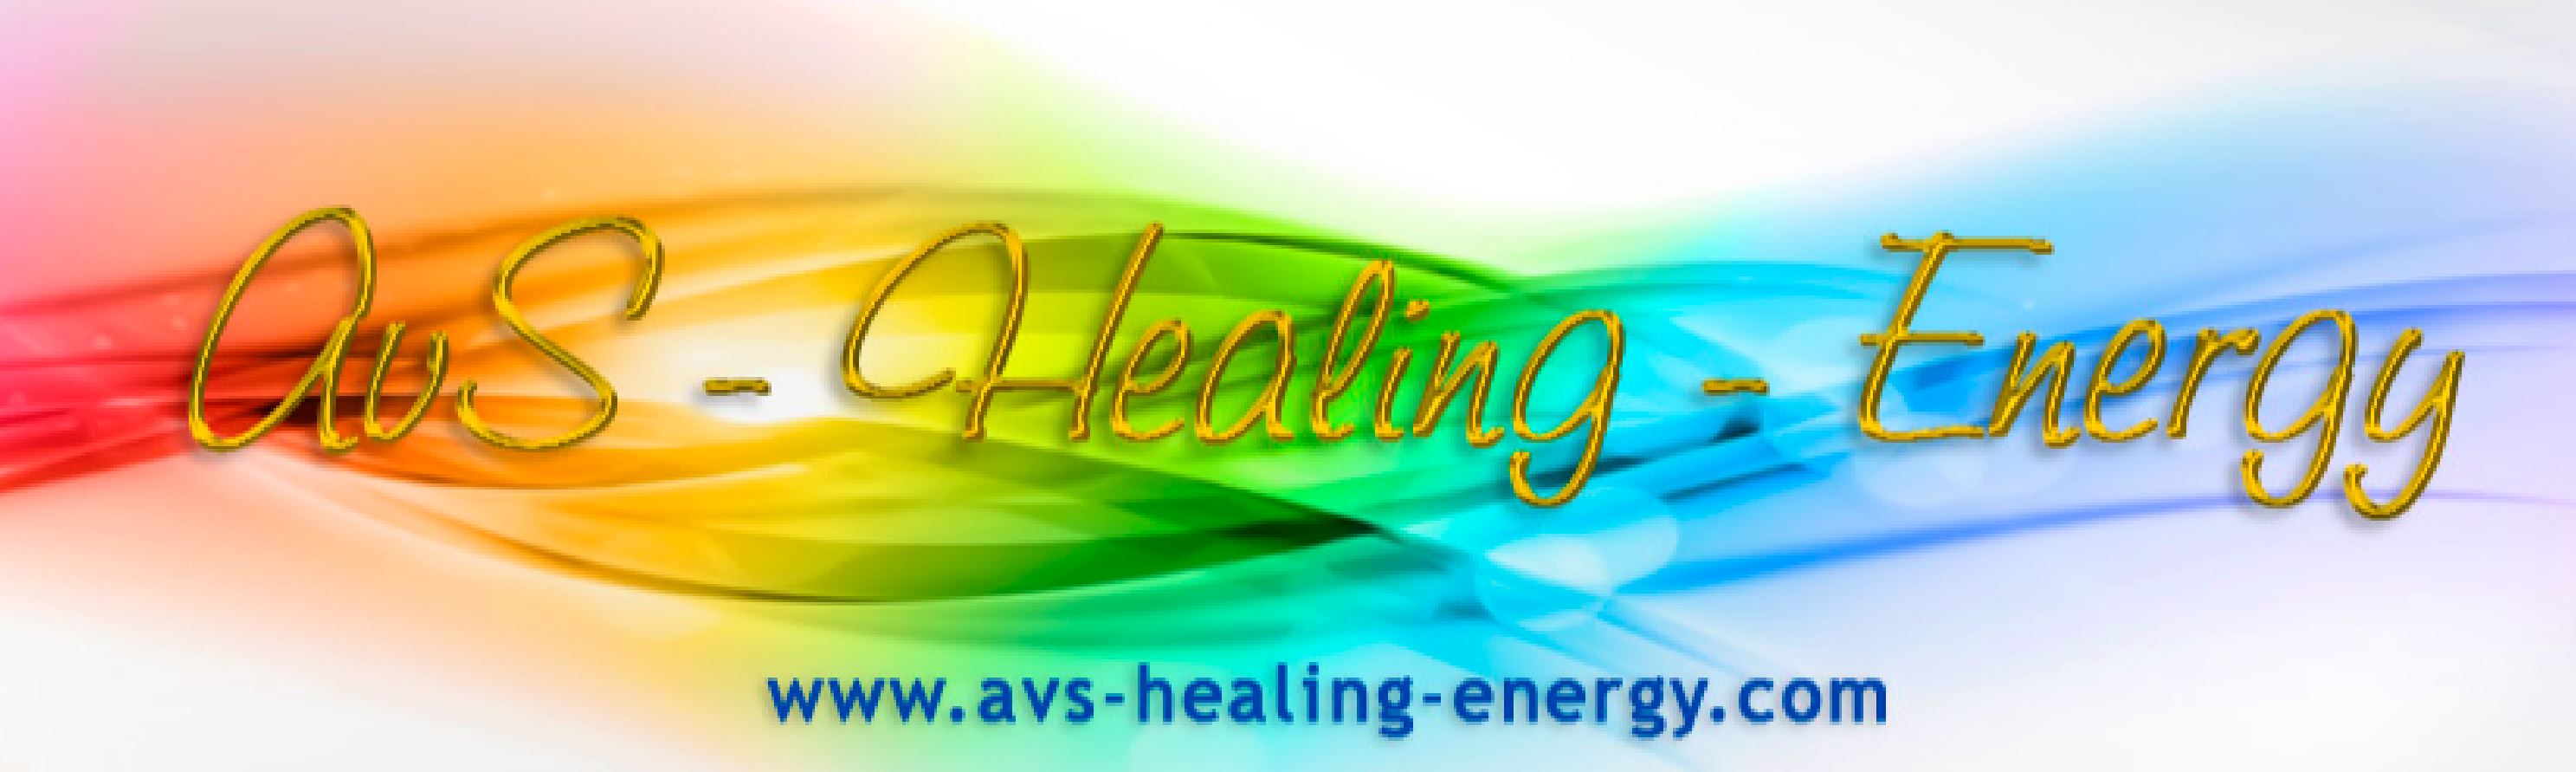 AVS Healing